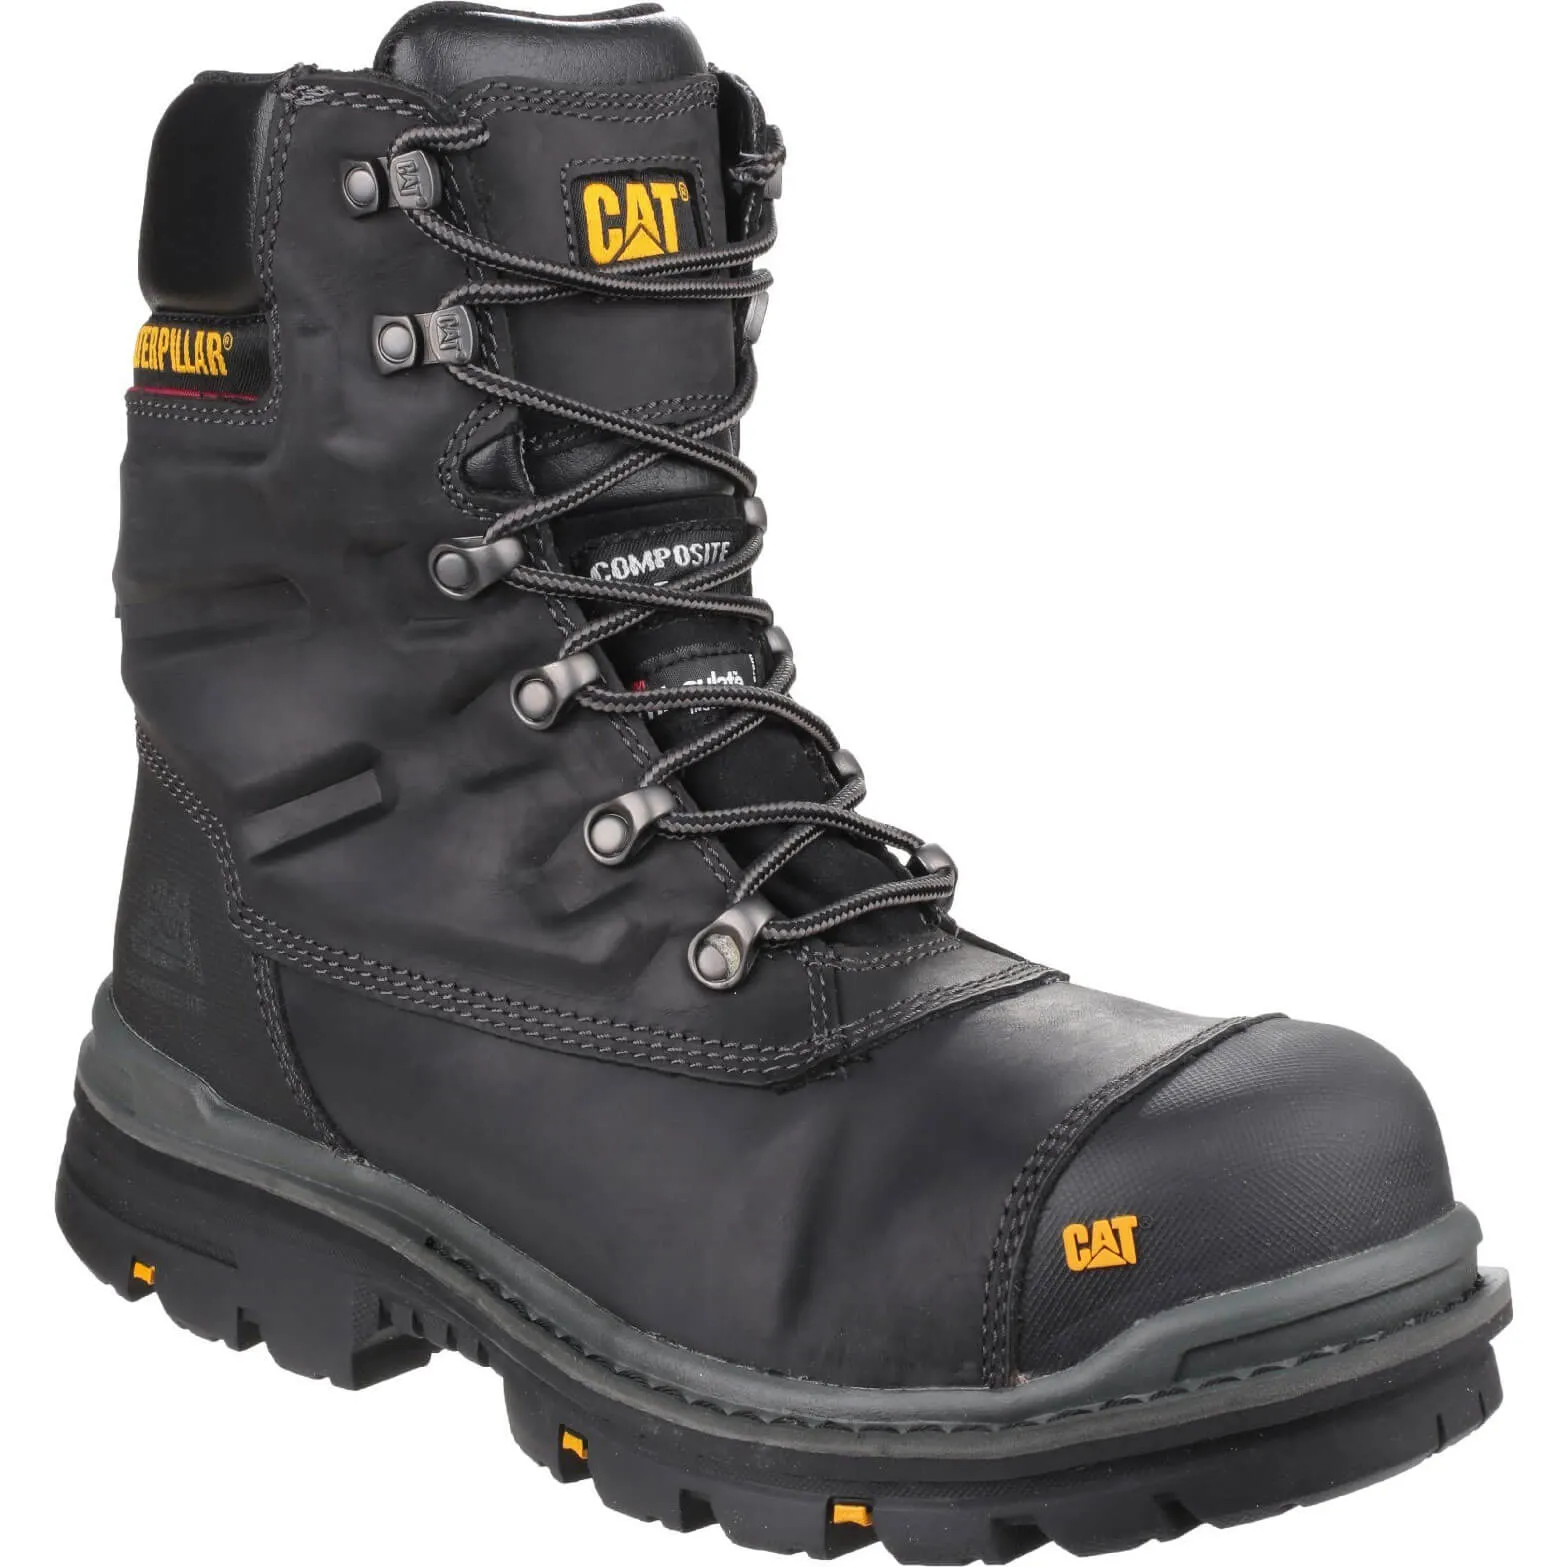 Caterpillar Mens Premier Waterproof Safety Boots - Black, Size 7